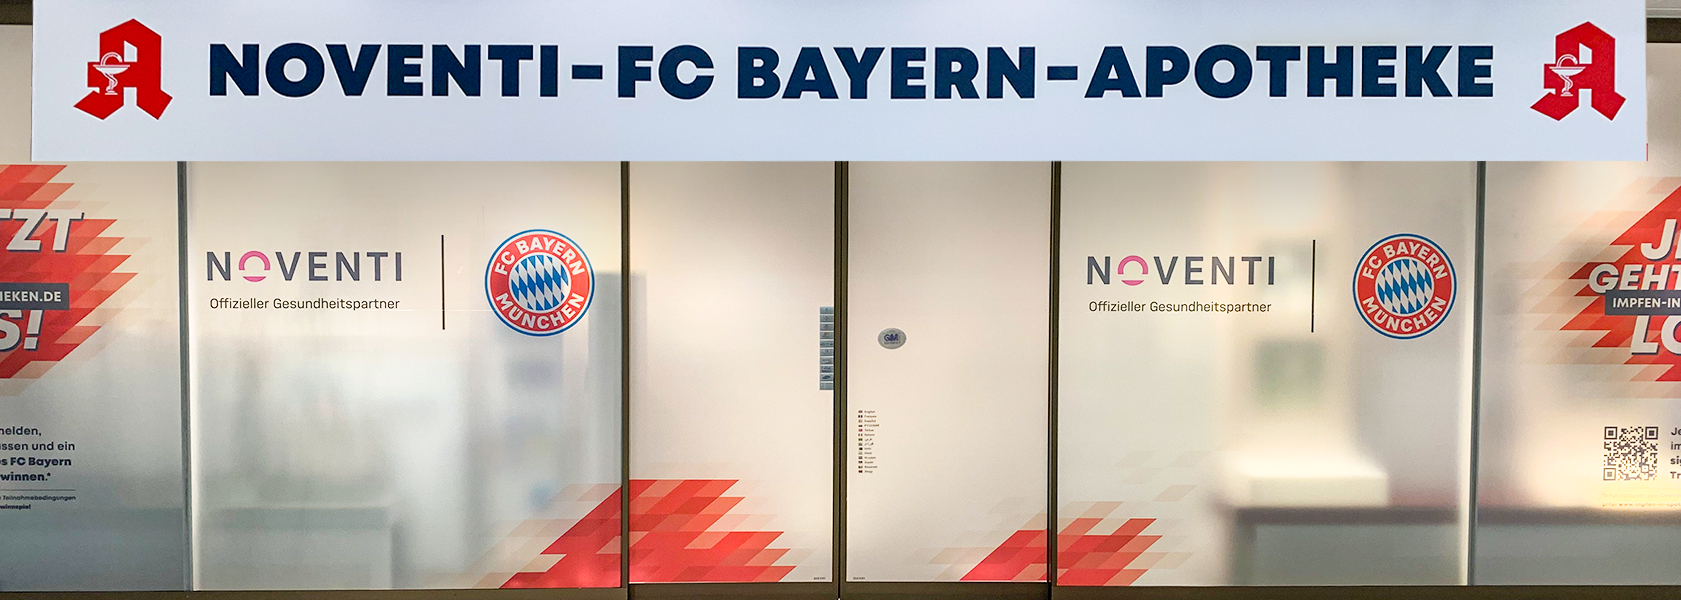 Die FC Bayern-Noventi-Impfapotheke